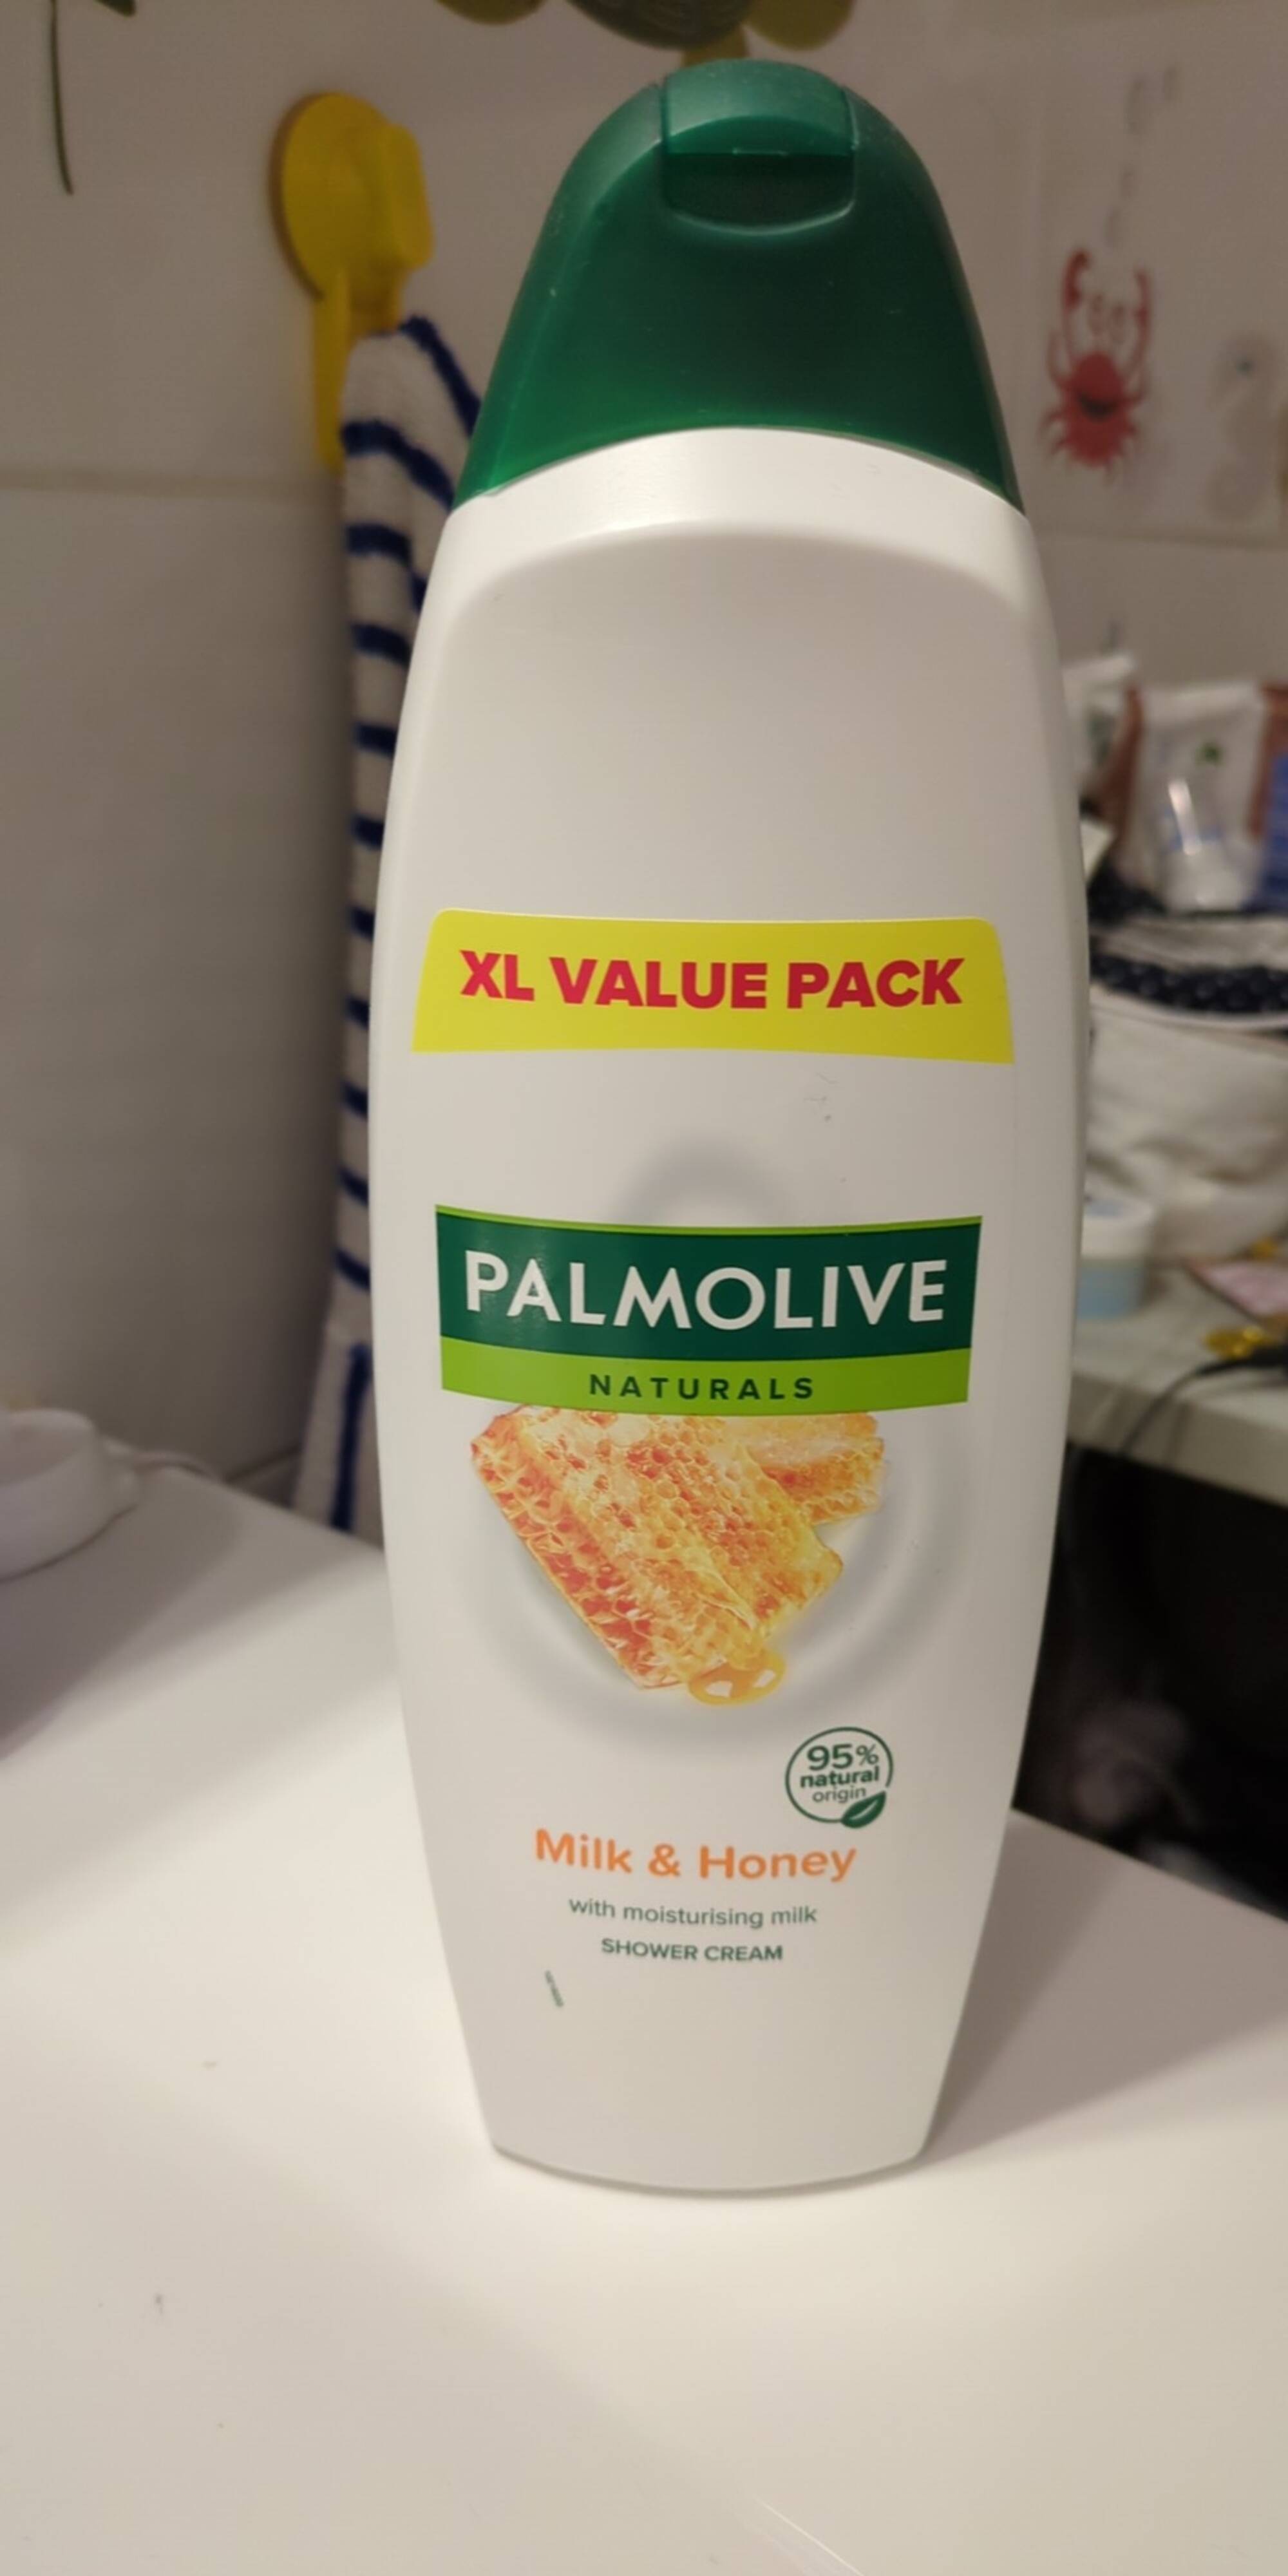 PALMOLIVE - Milk & honey - Shower cream